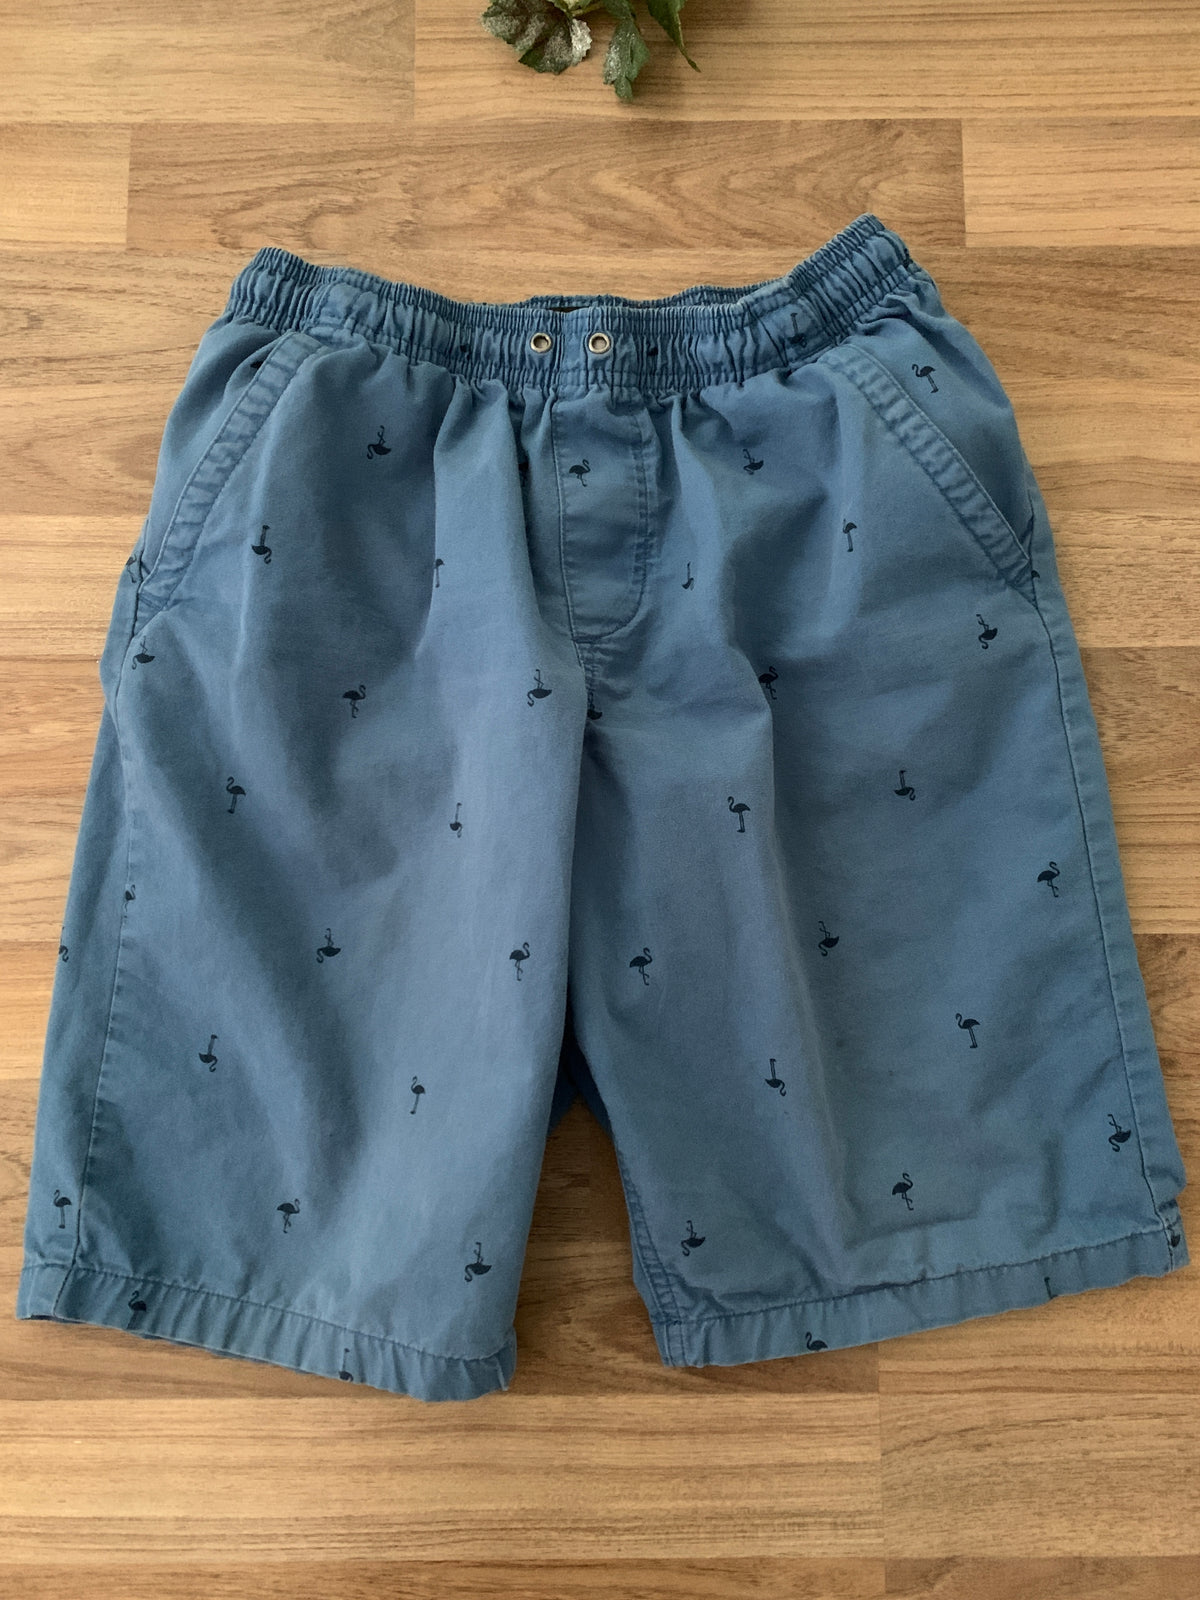 Shorts (Boys Size 14-16)